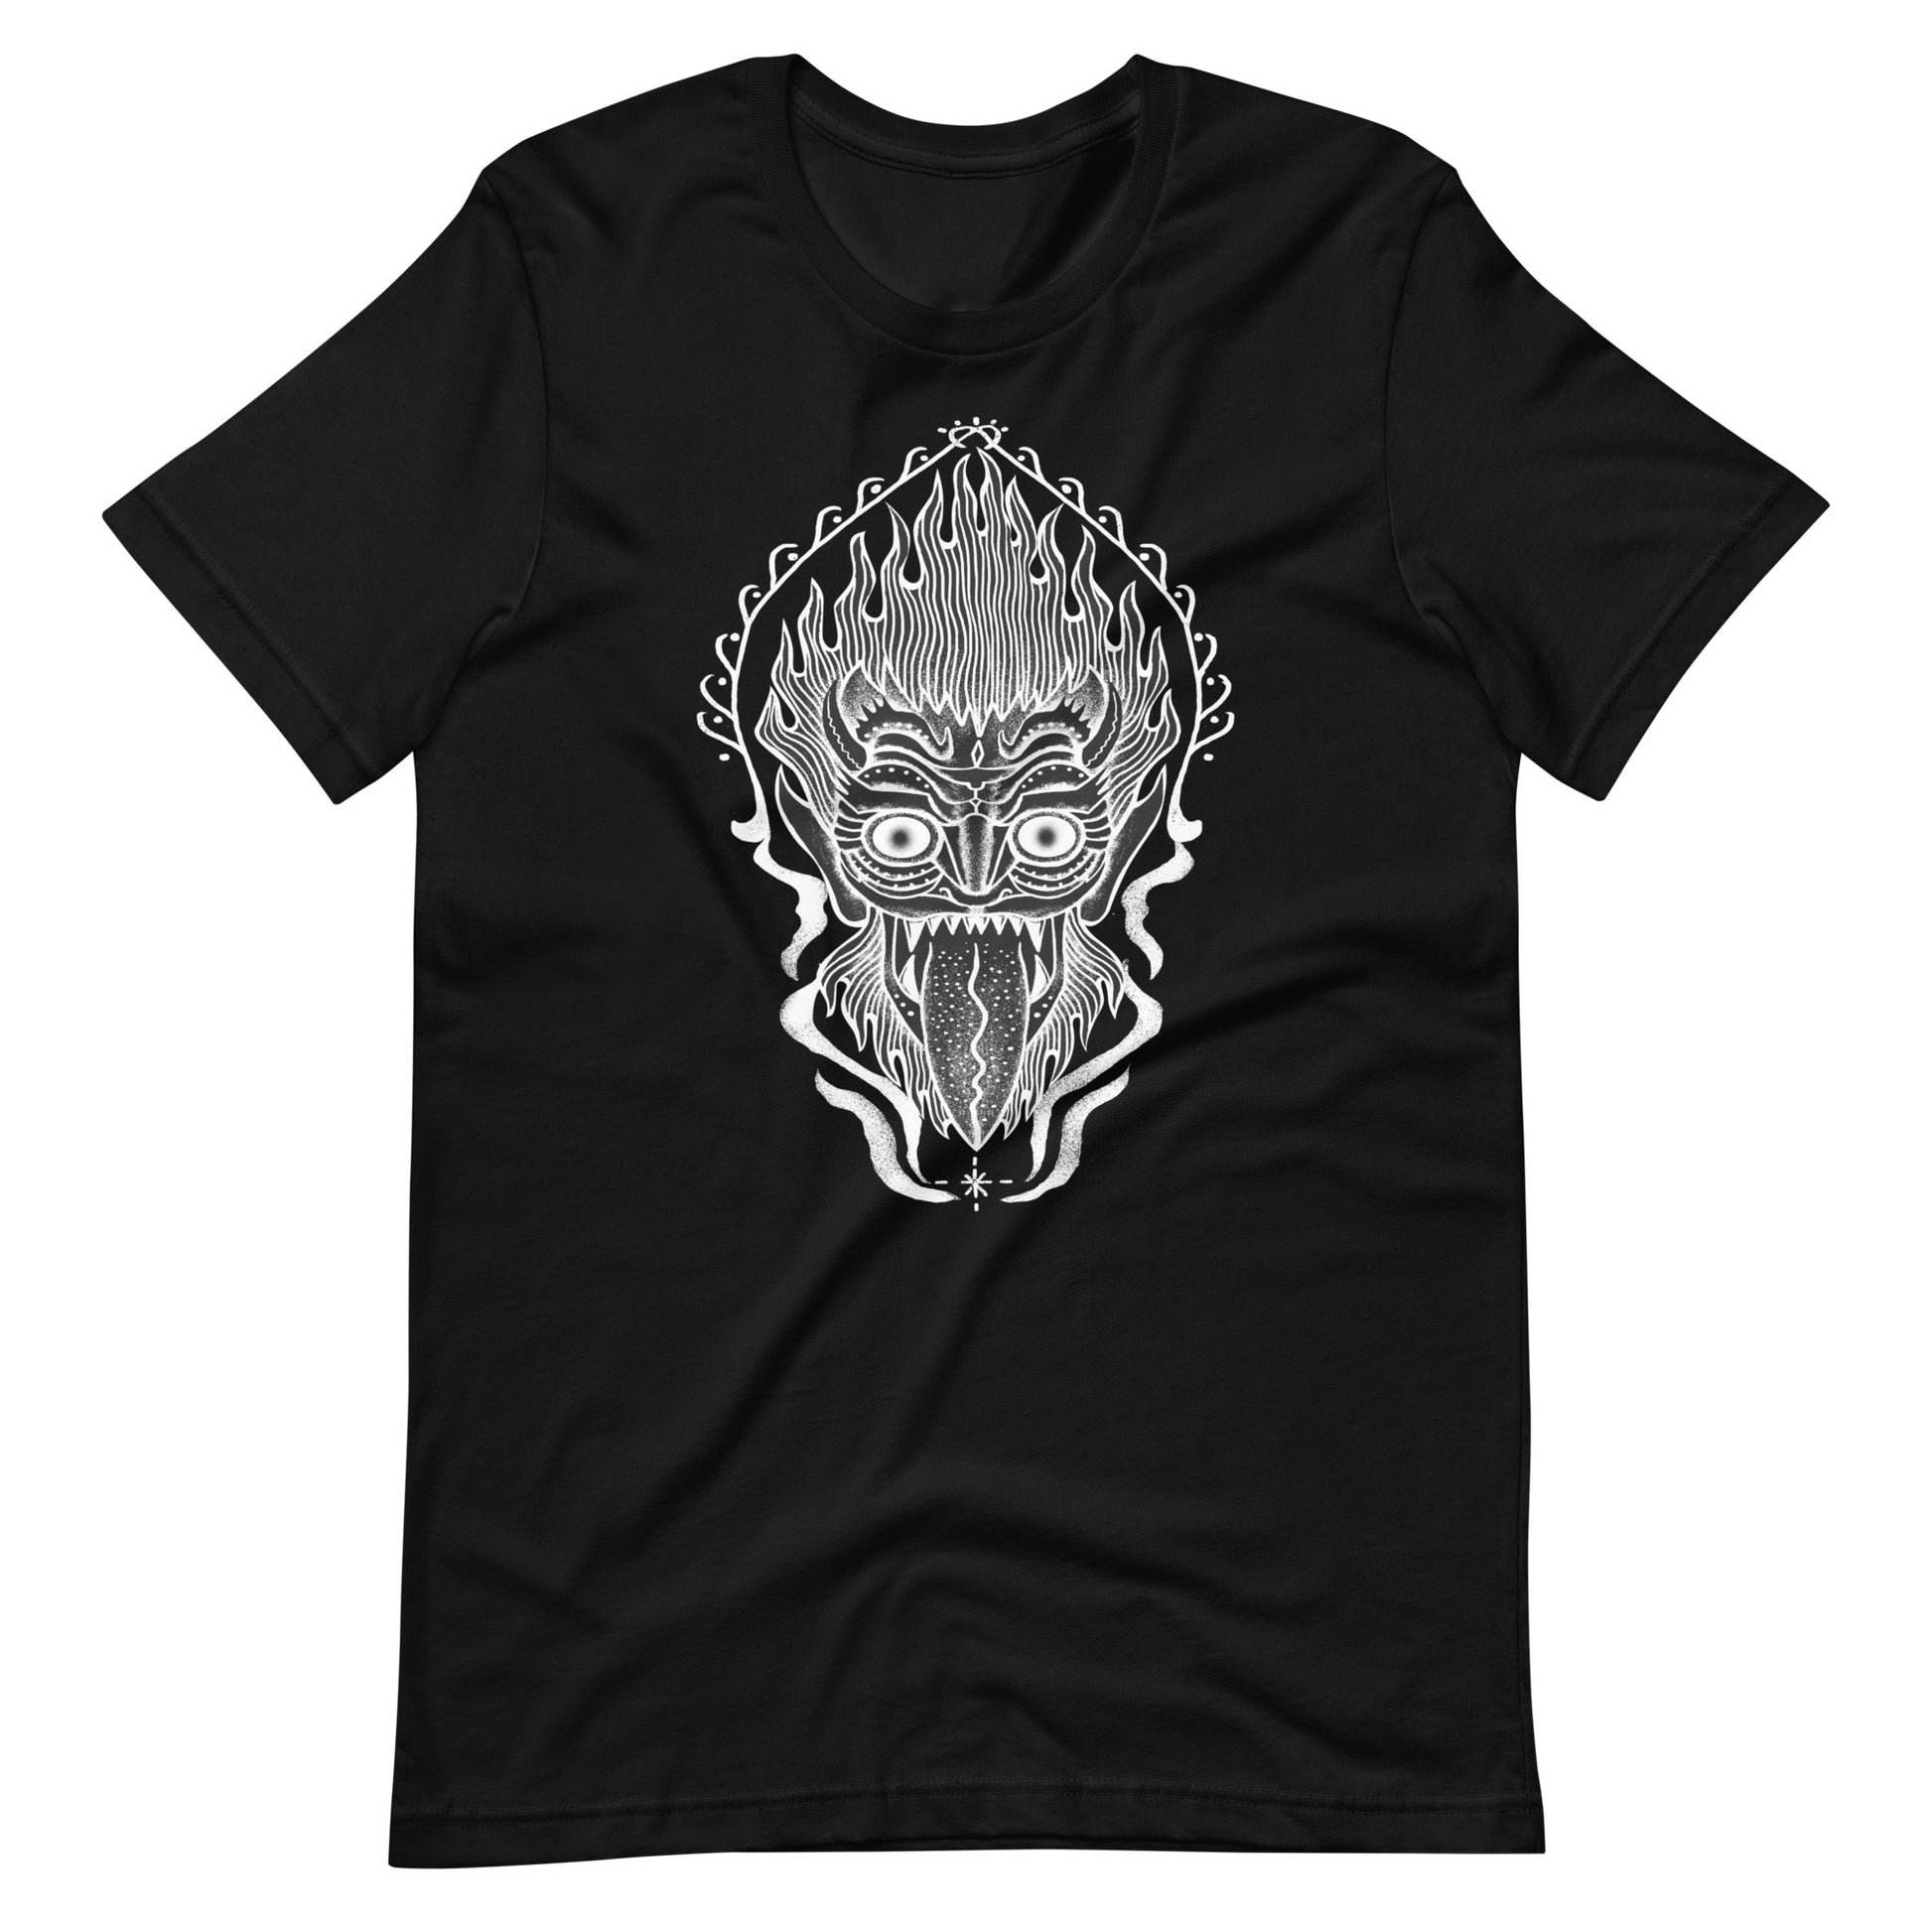 King of Fire - Men's t-shirt - Black Front